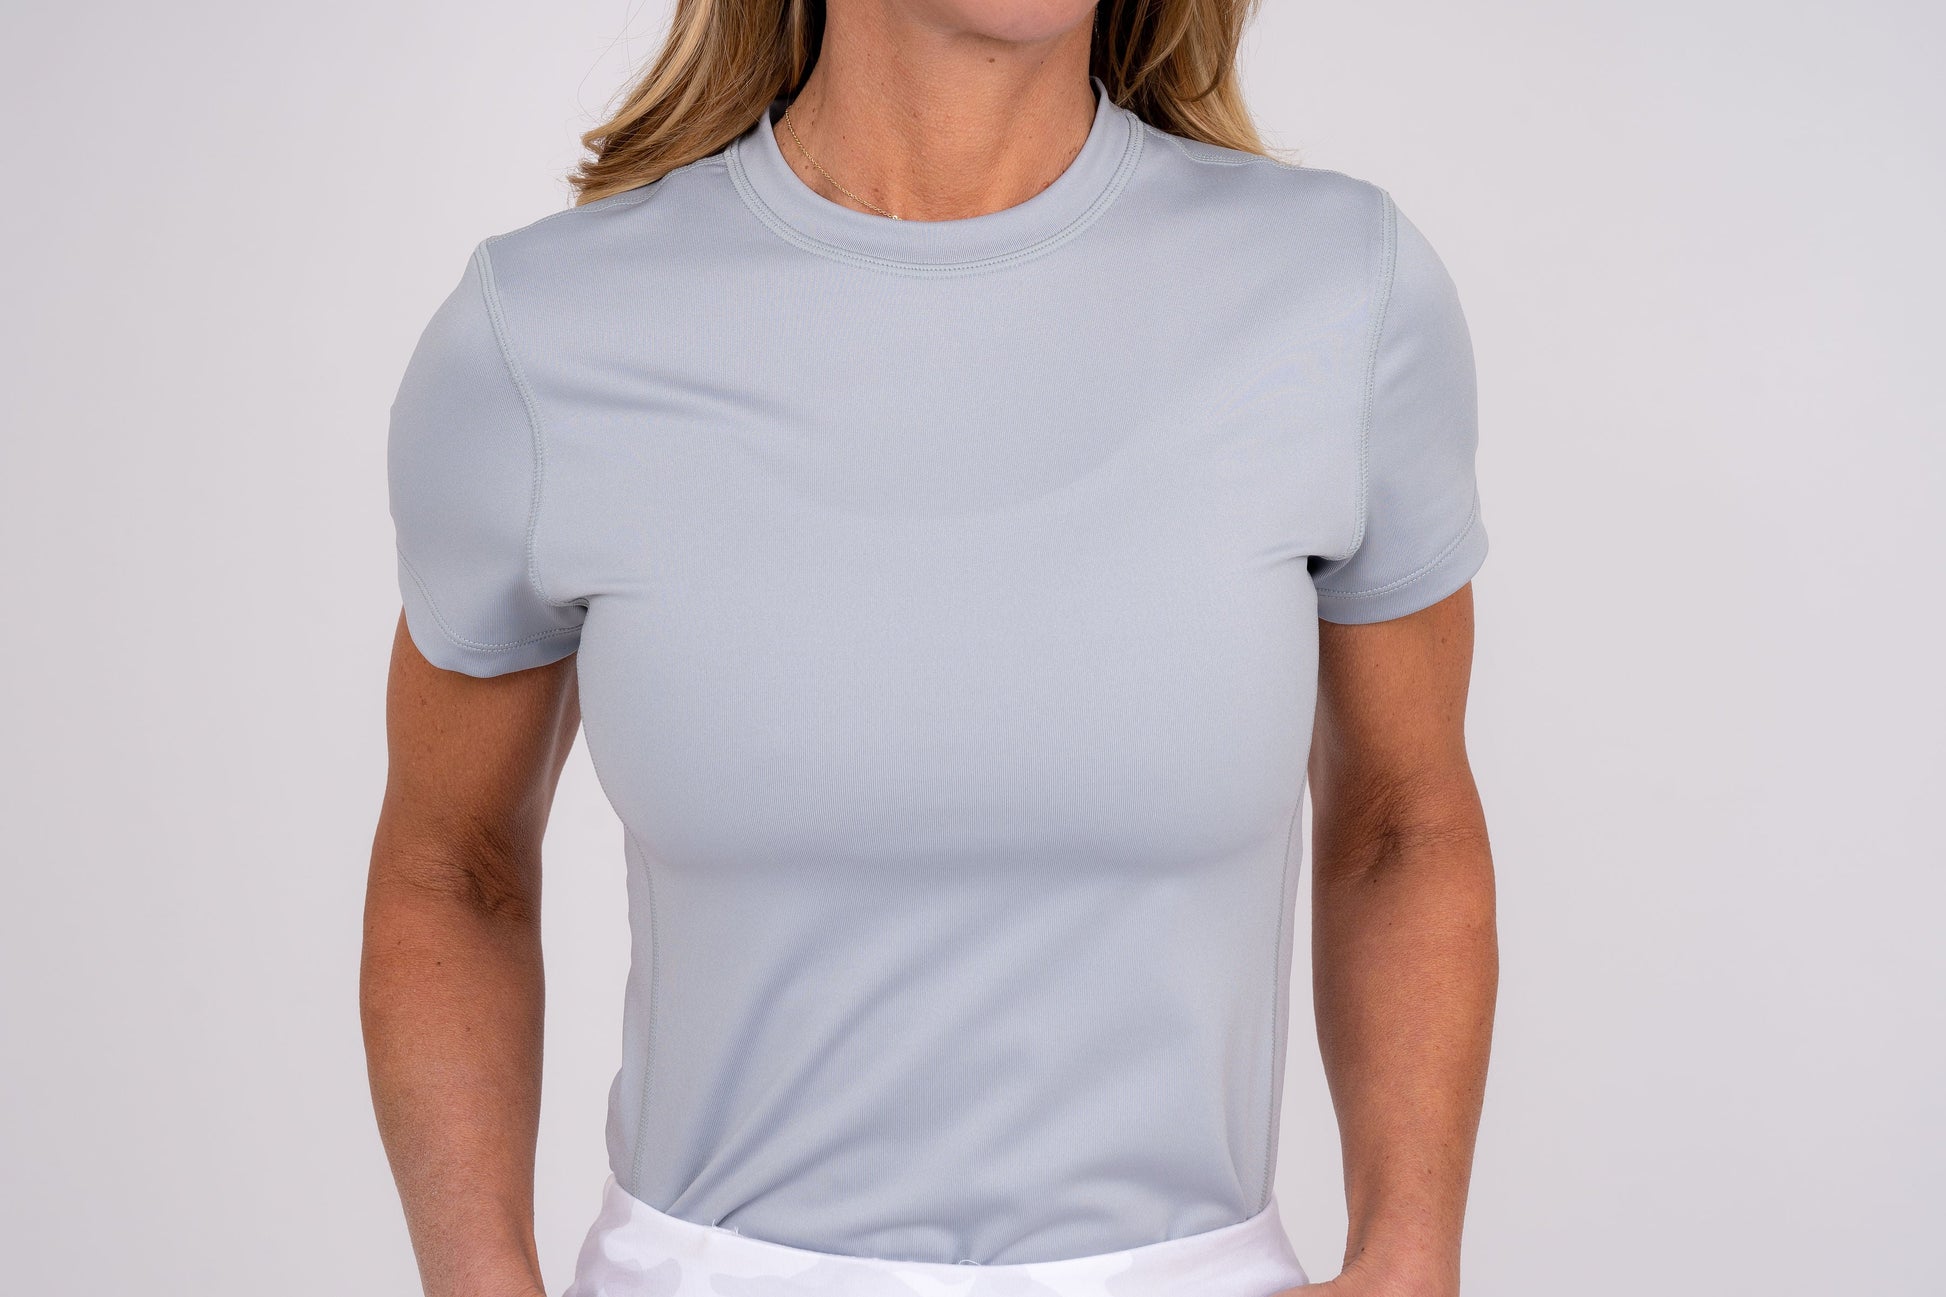 Women's Collarless Athletic Top- Grey Women's Golf Shirt Taylor Jordan Apparel XS 